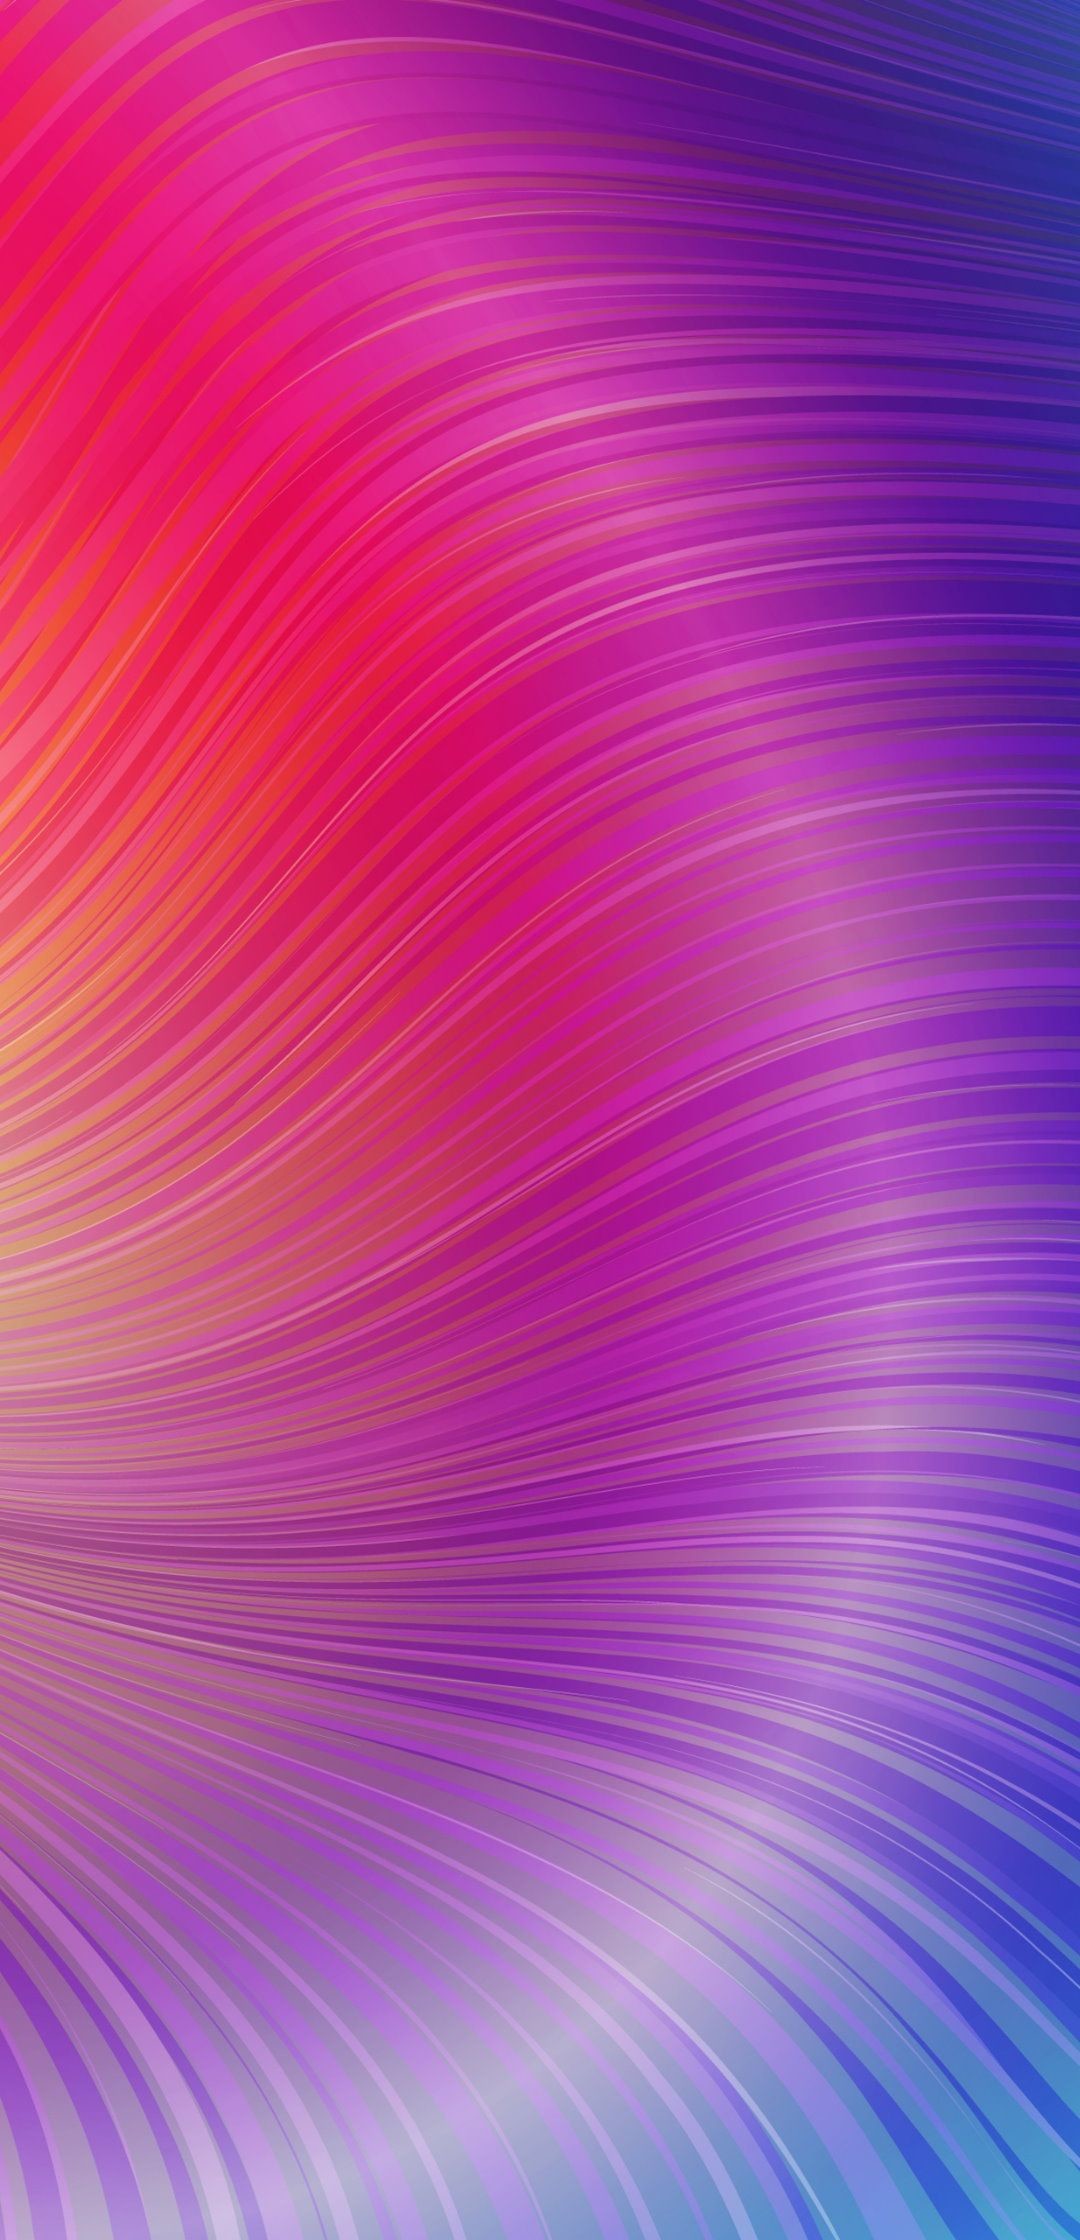 Wallpapers Huawei P20 Pro Stripe Iphone Wallpaper, - Purple Waves Wallpaper For Iphone 6 - HD Wallpaper 